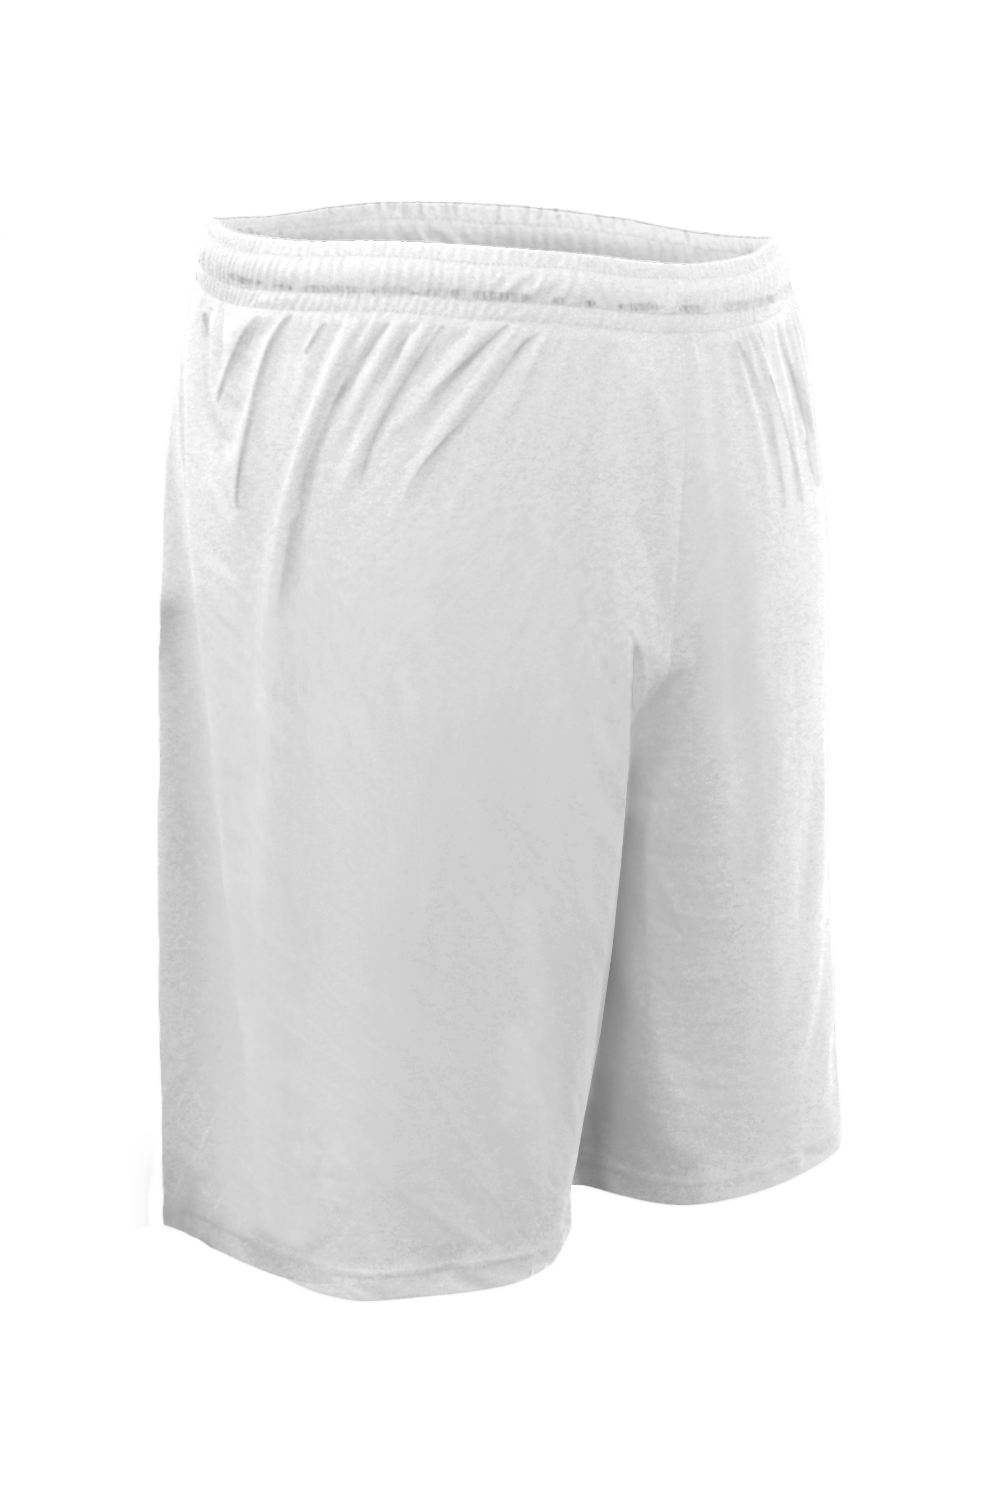 Micro Shorts (White)